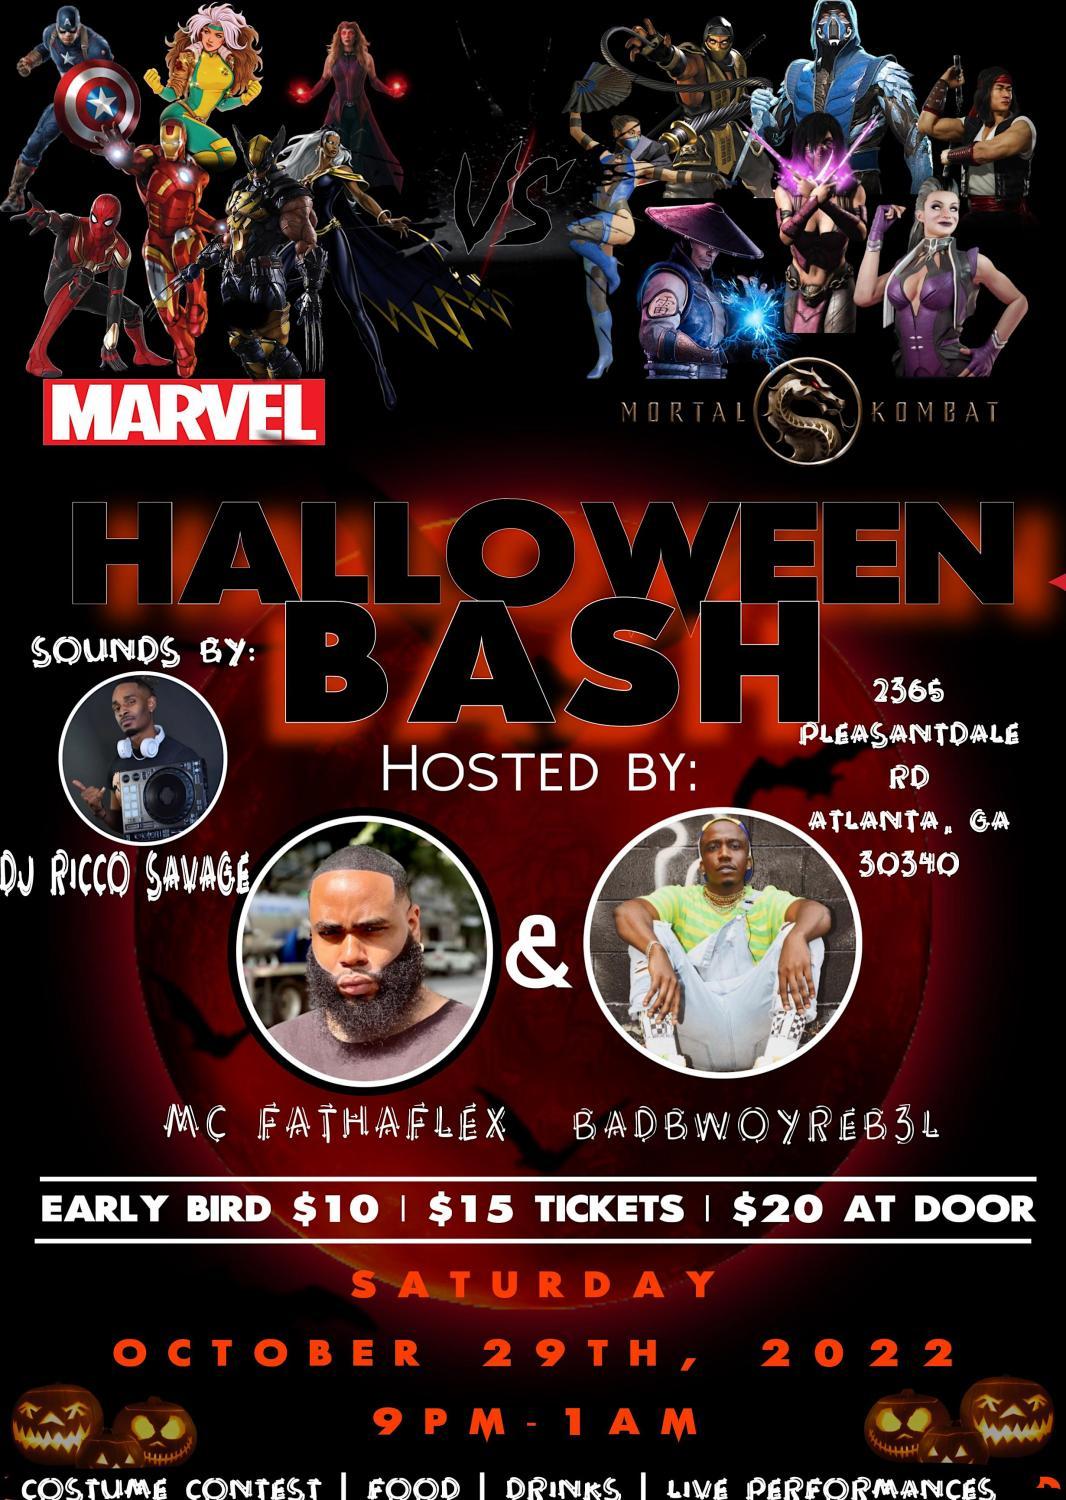 Marvel vs Mortal Kombat Halloween Bash
Sat Oct 29, 8:30 PM - Sun Oct 30, 12:00 AM
in 22 days